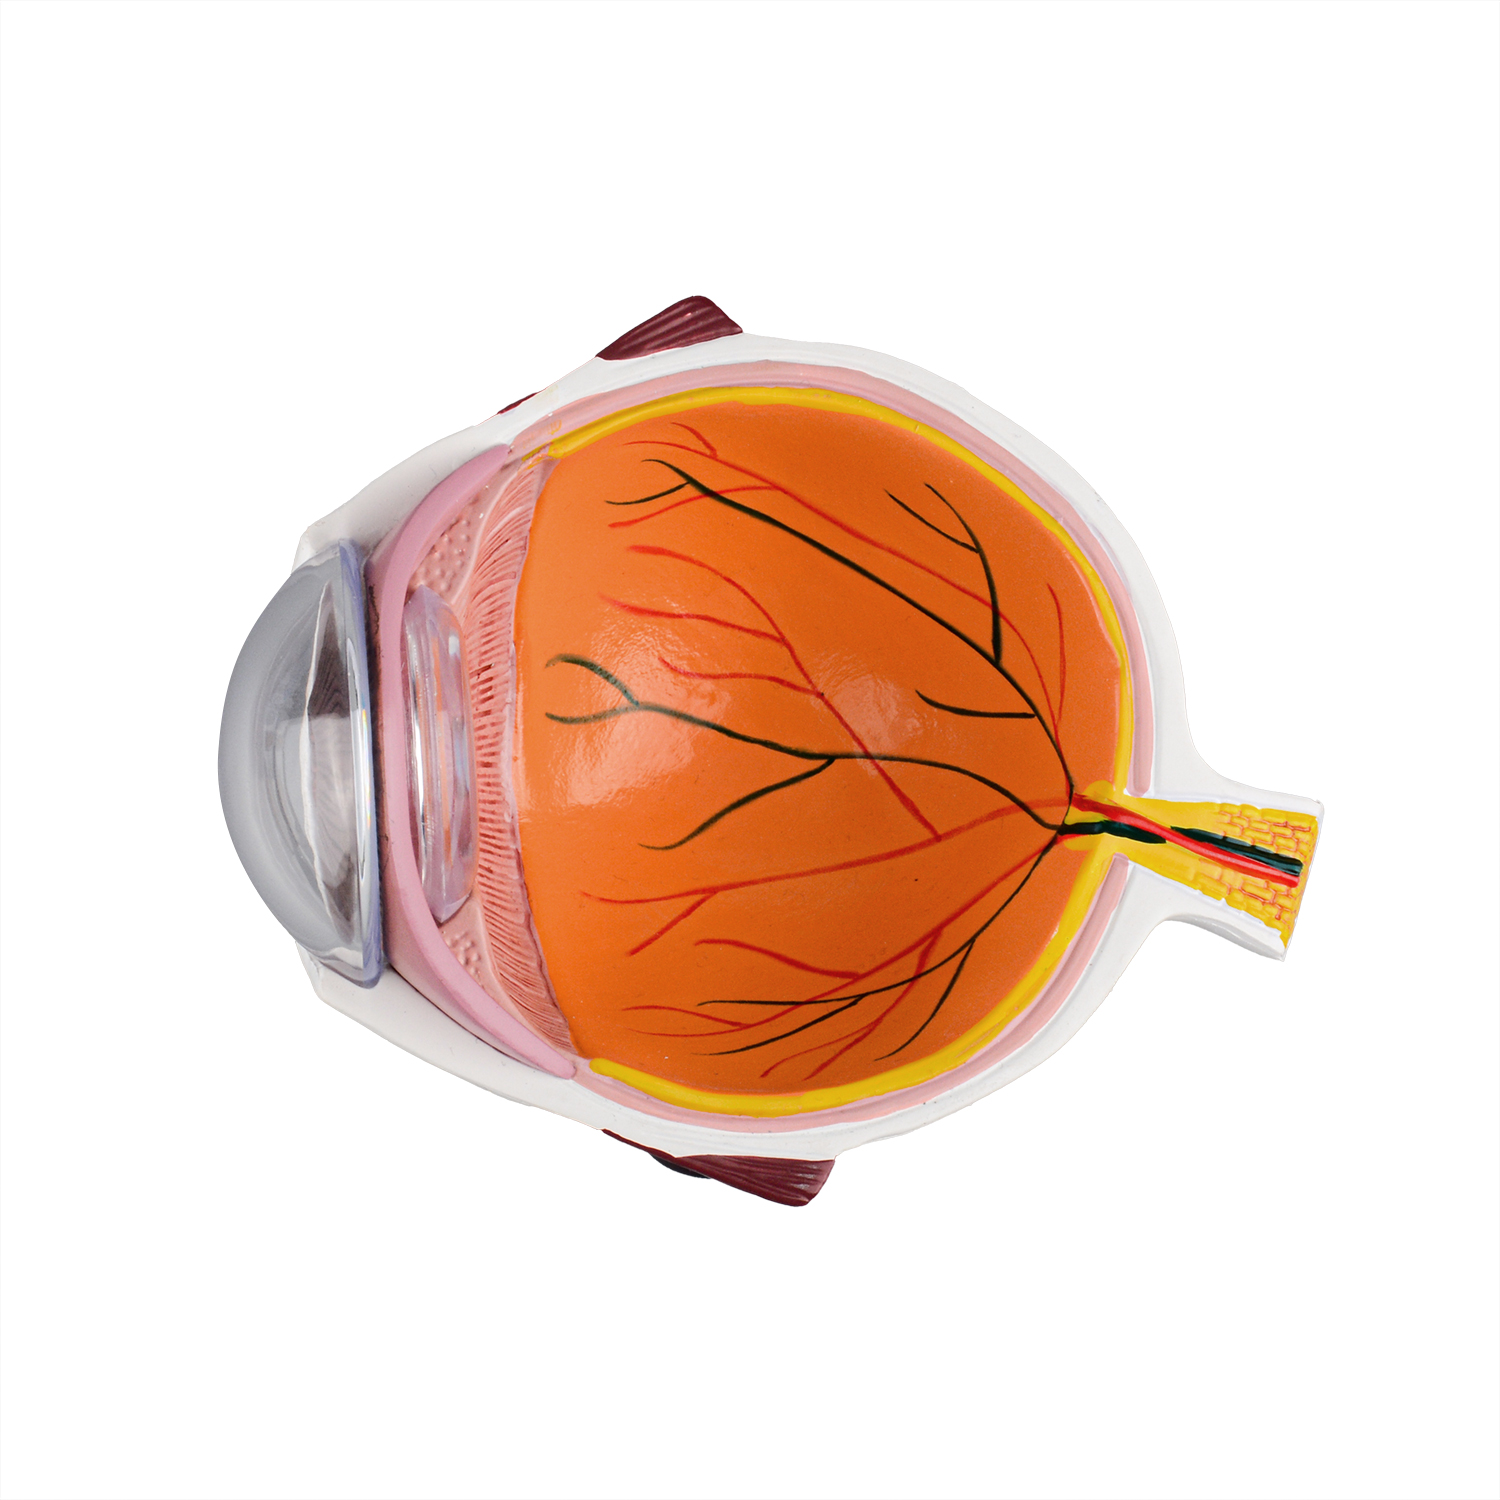 Oversized Human Cataract Eye Anatomy Model for Patient Education